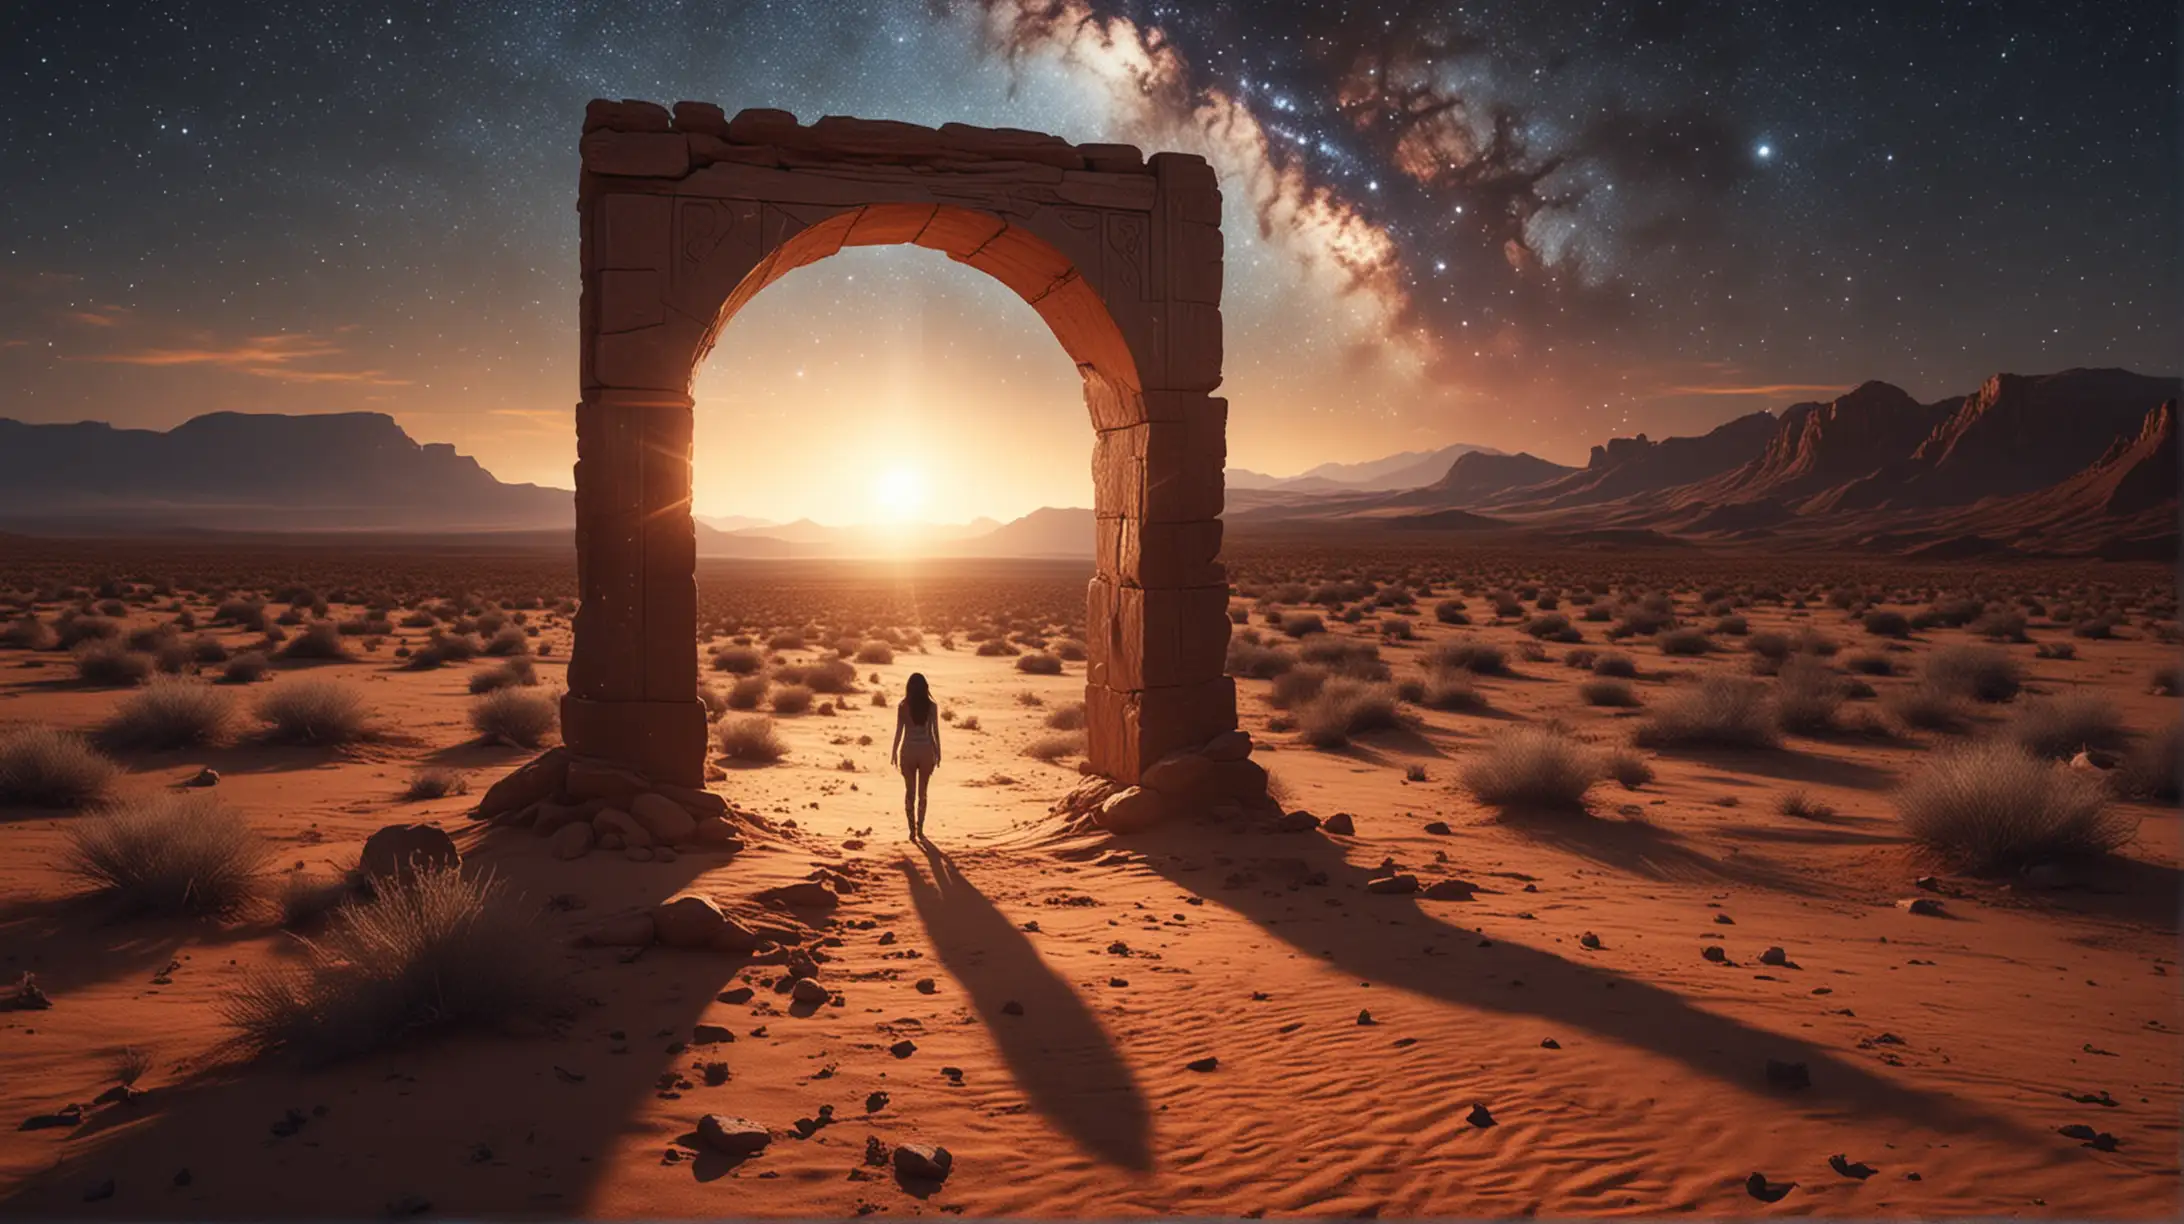 Mysterious Desert Portal Revealing Another World with Dark Figure Emerging